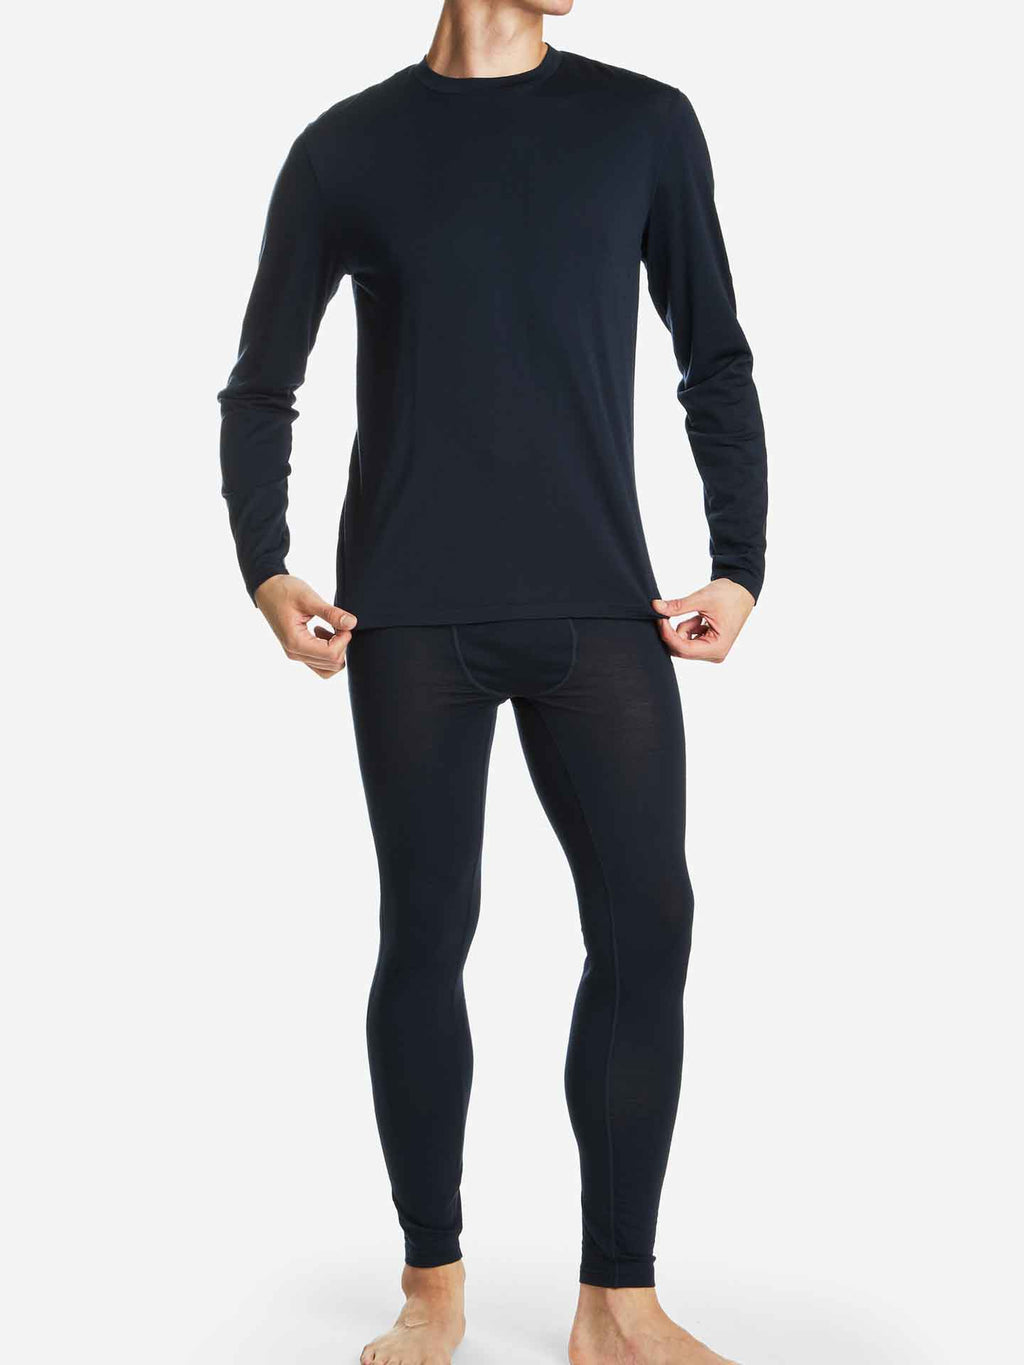 Norwegian 100% wool Natvig close-fitting thermal underwear